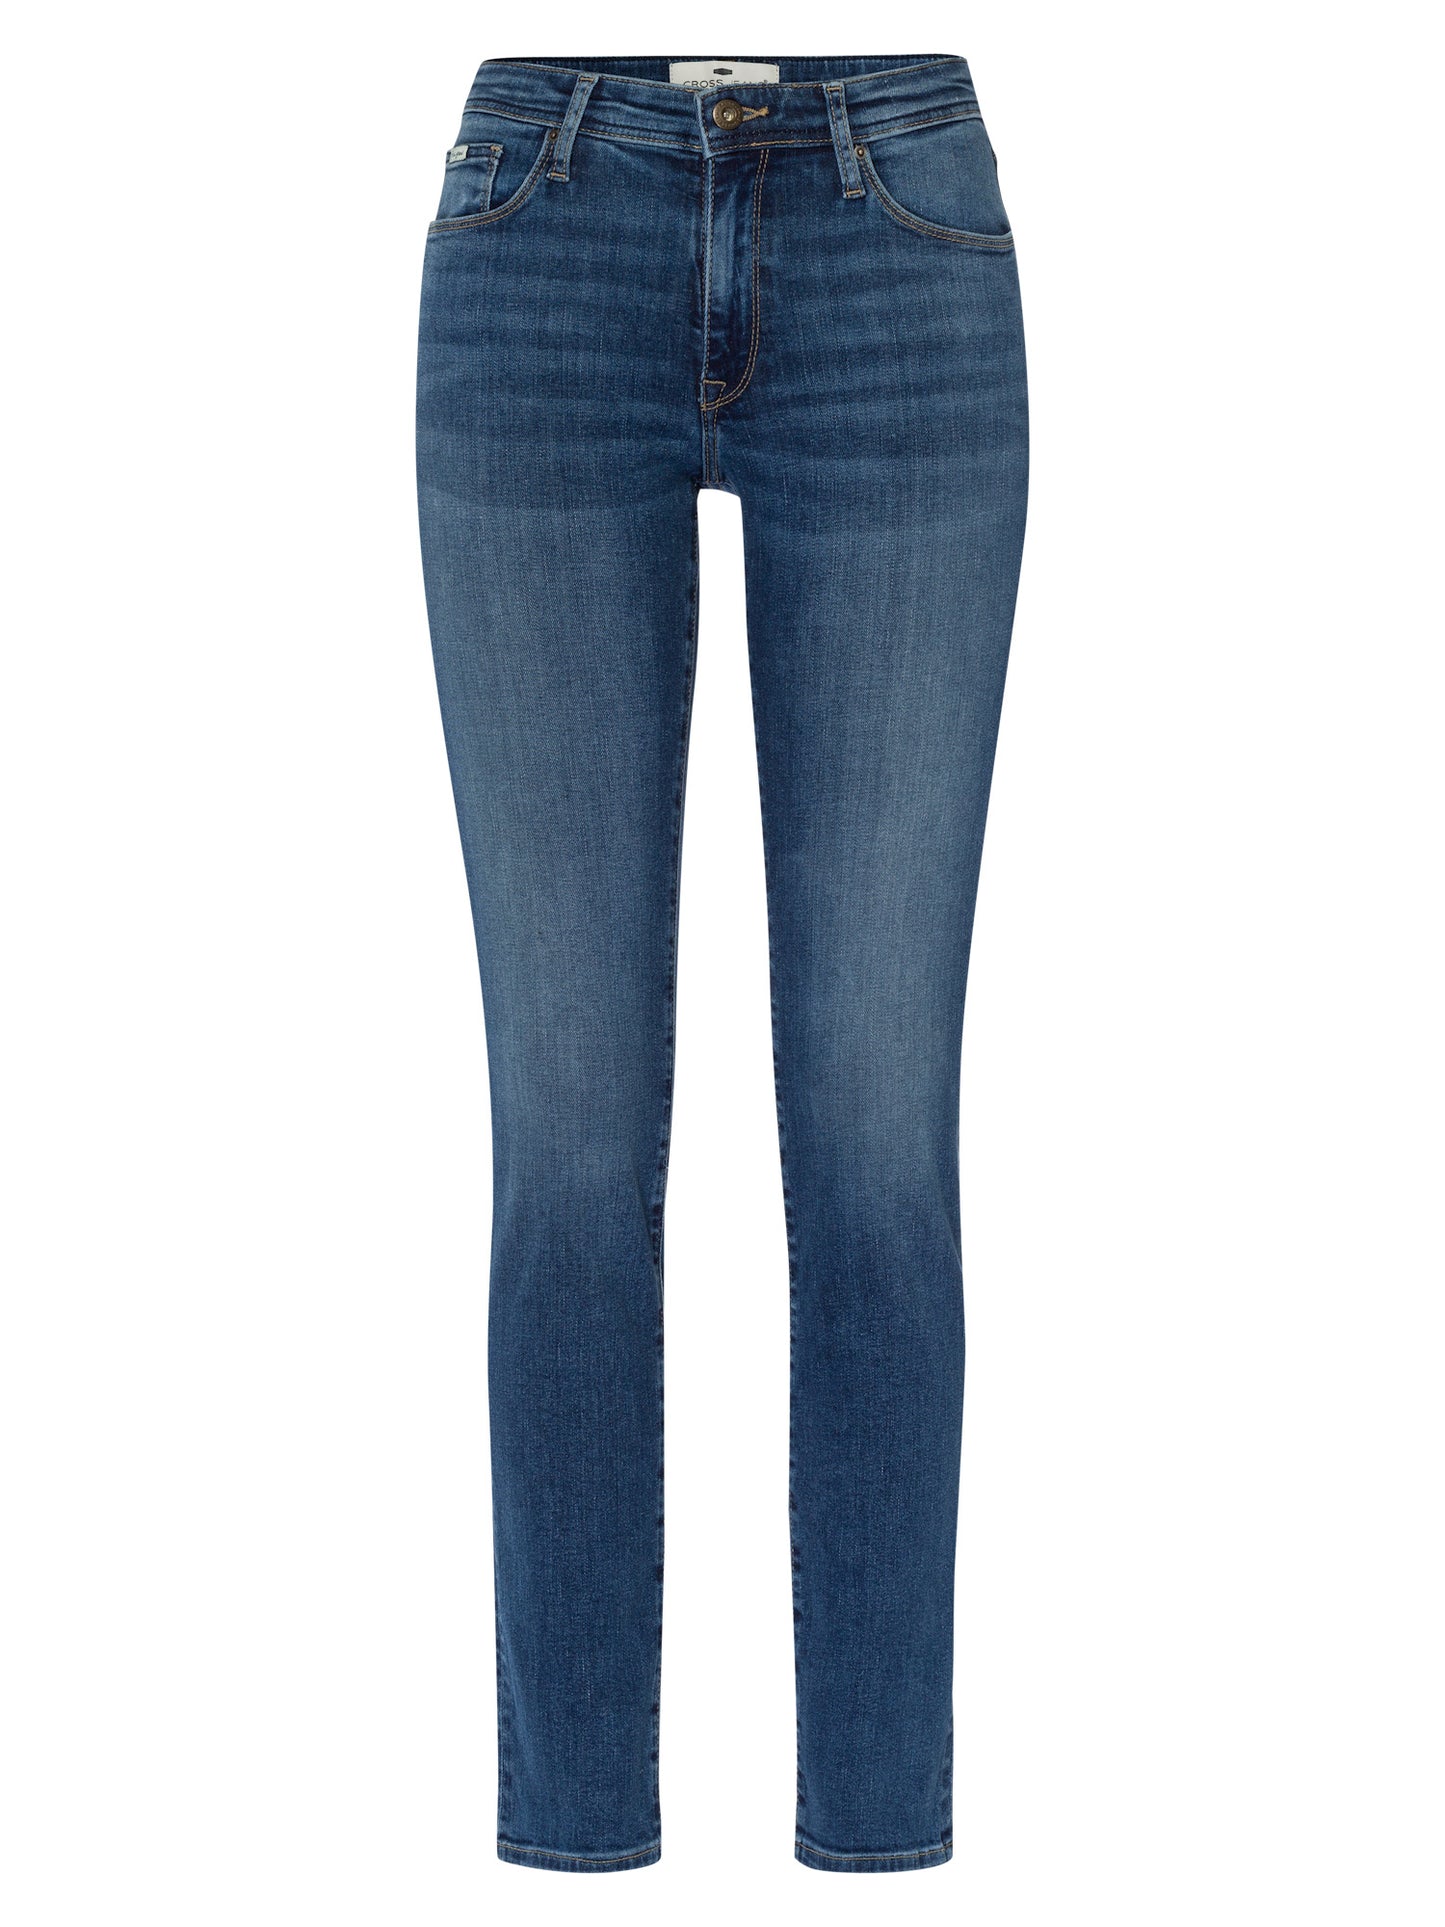 Anya women's jeans slim fit high waist medium blue